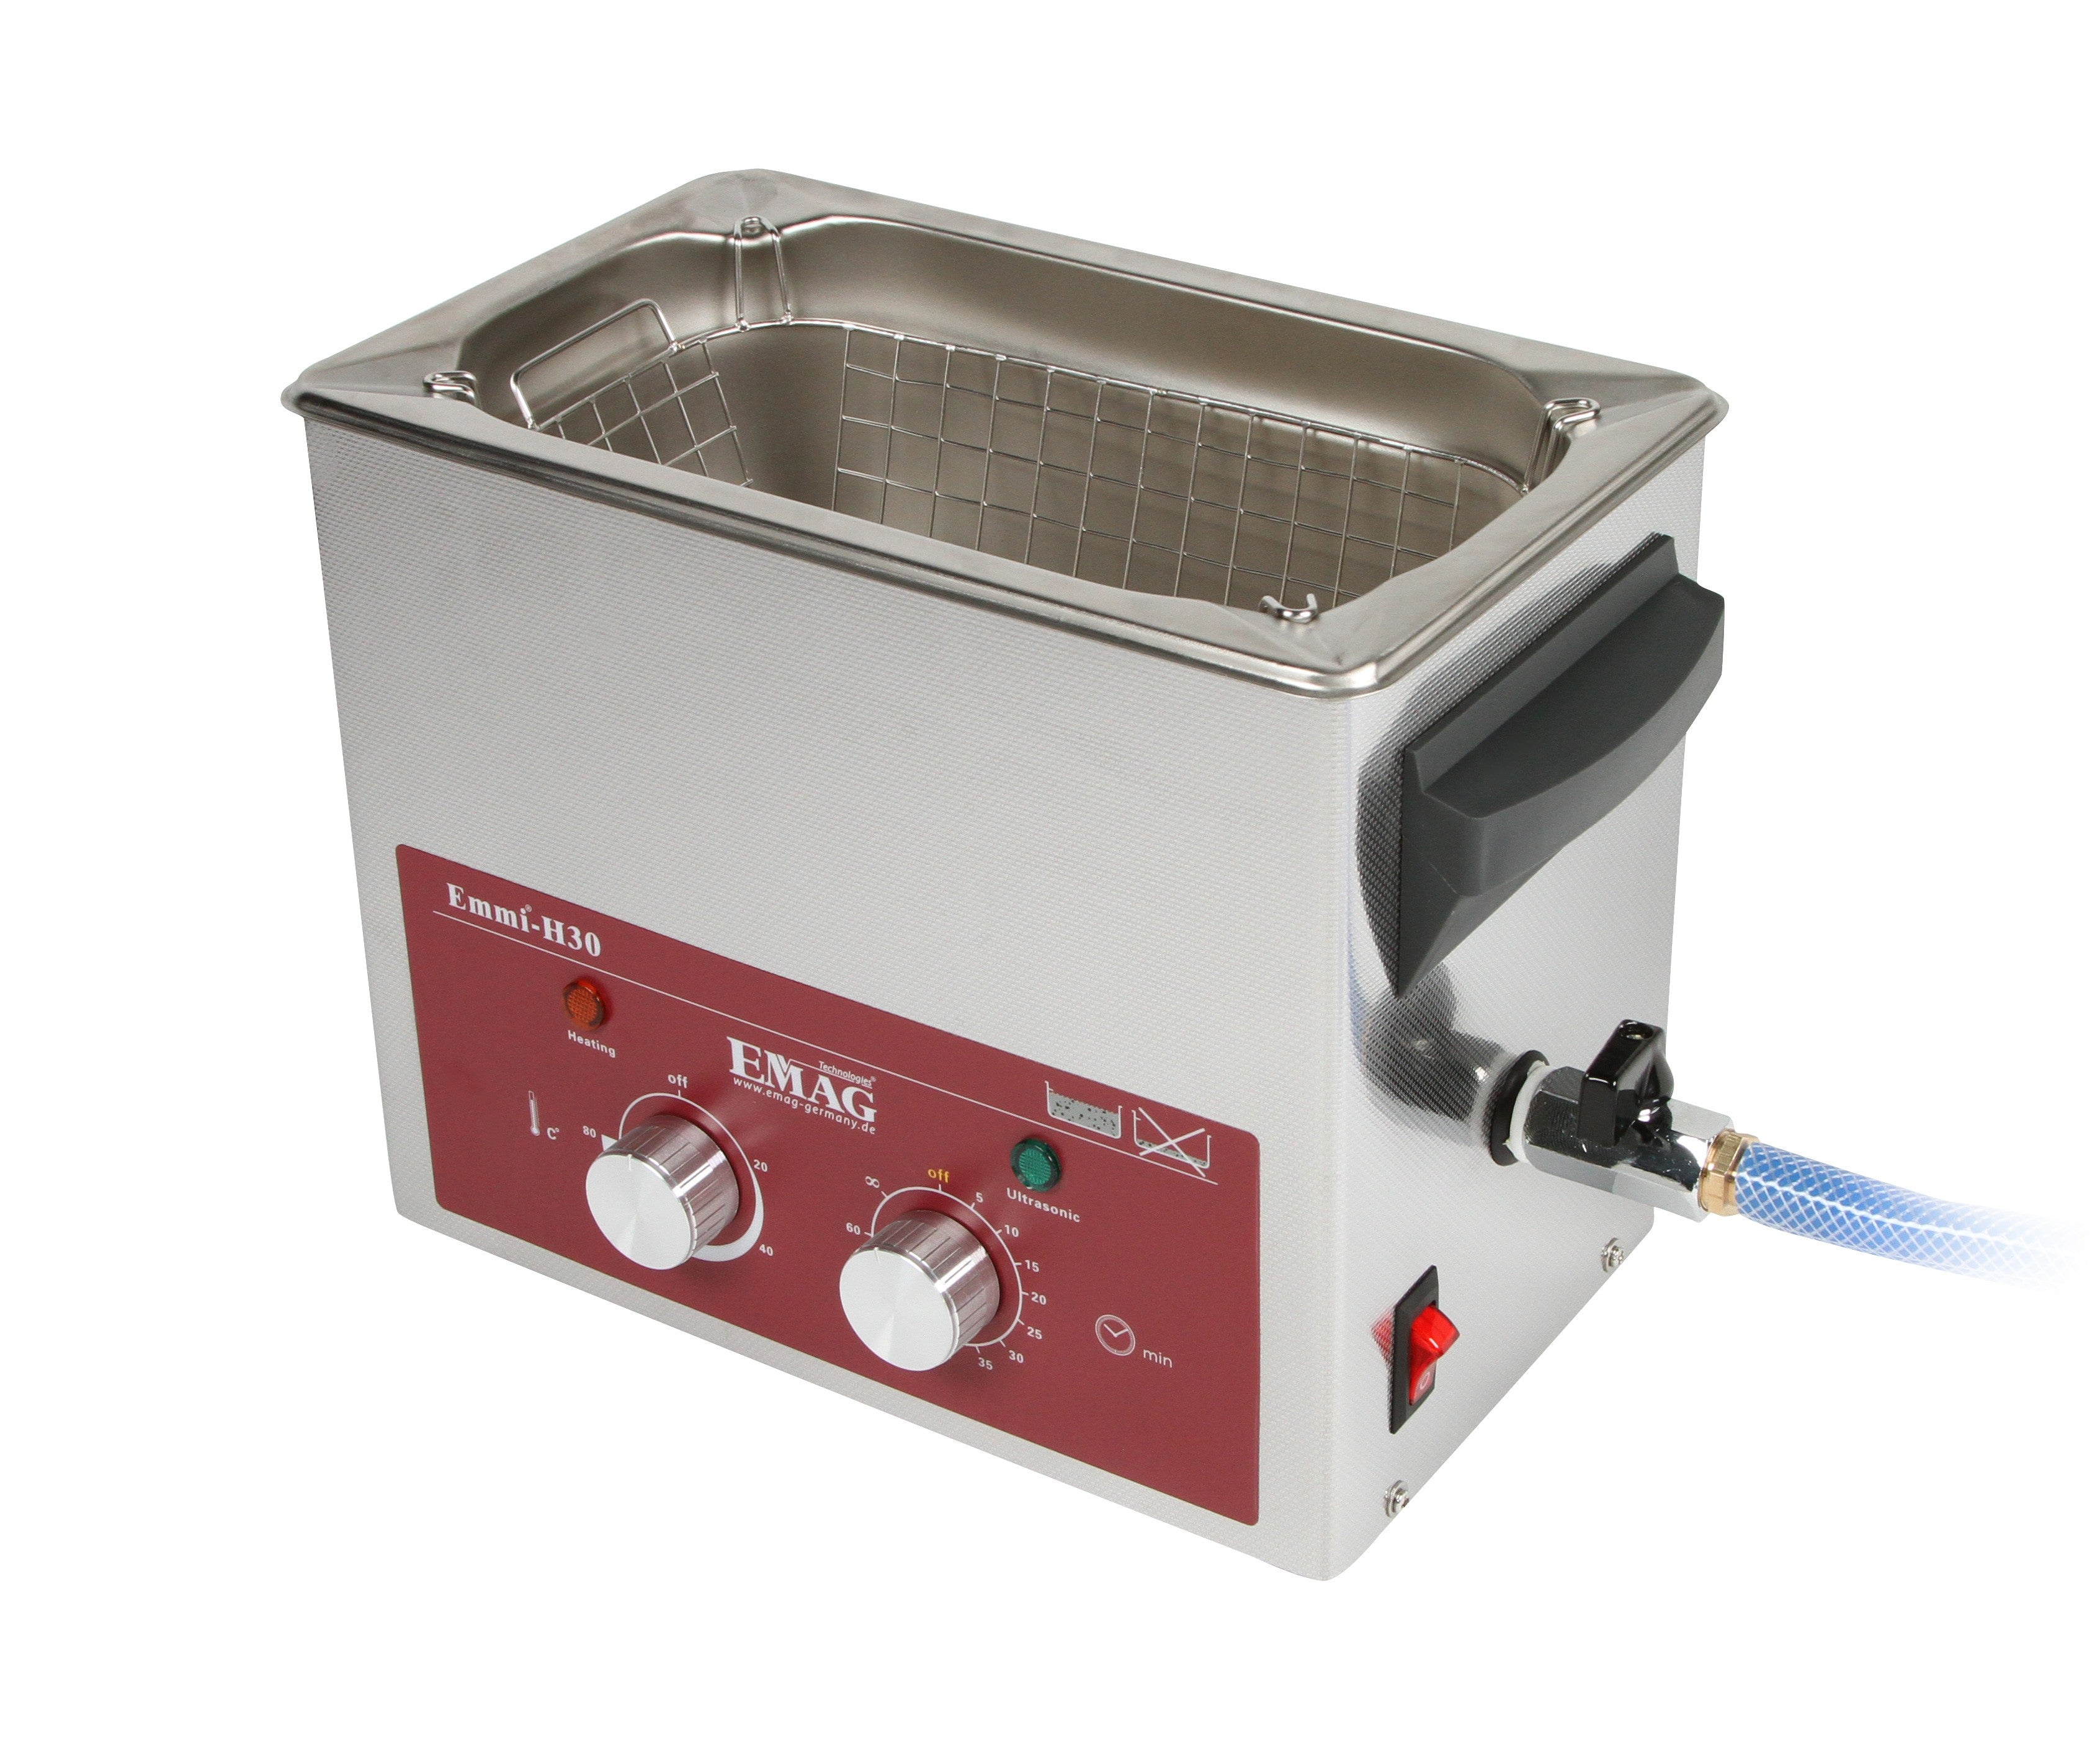 Nettoyeur à ultrasons tout en inox 3L - Emmi-H30 avec robinet de vidange